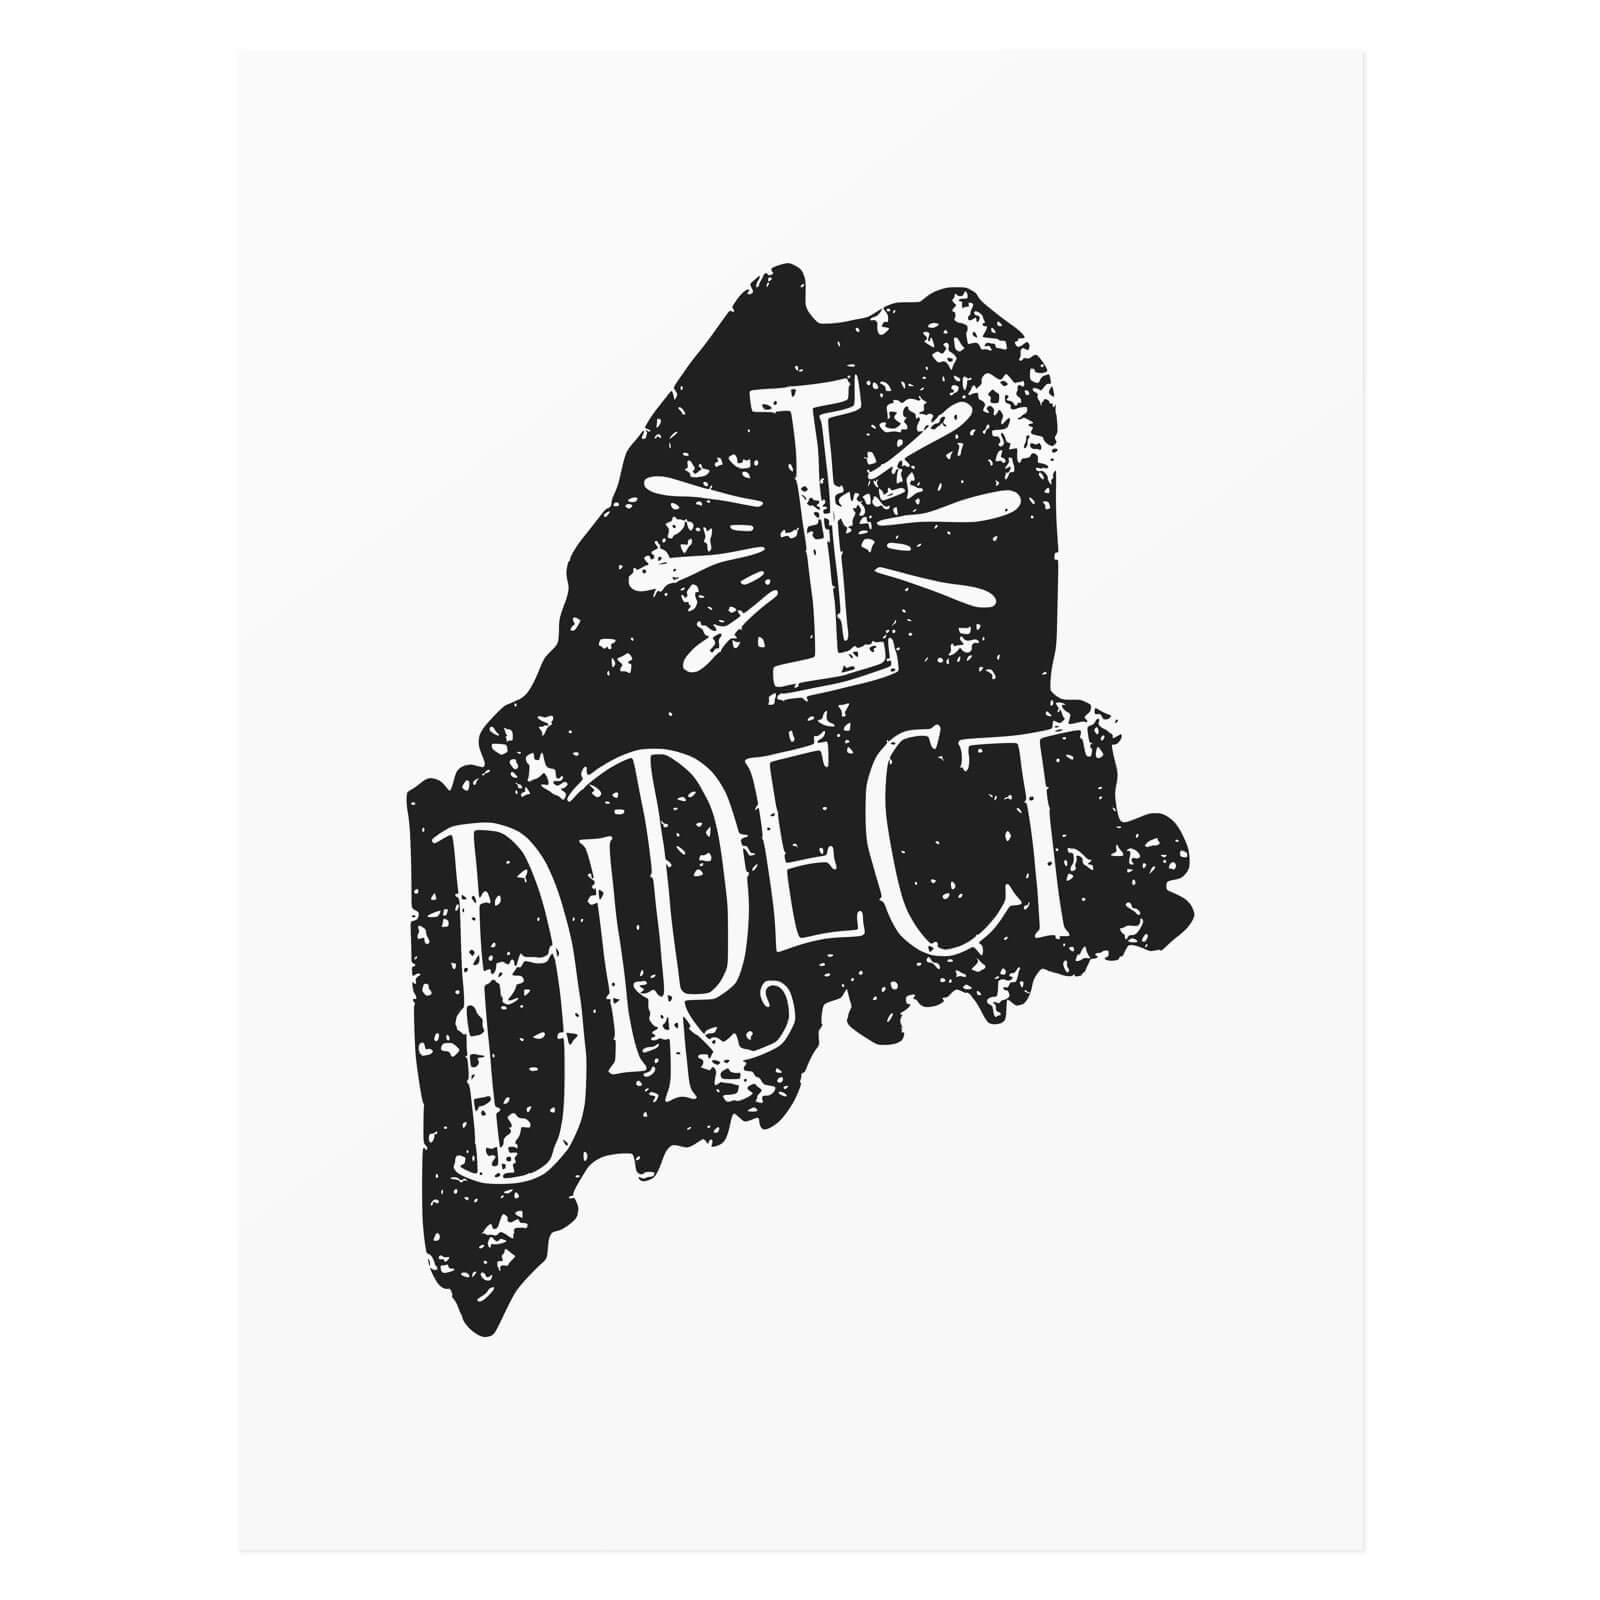 Maine — I direct